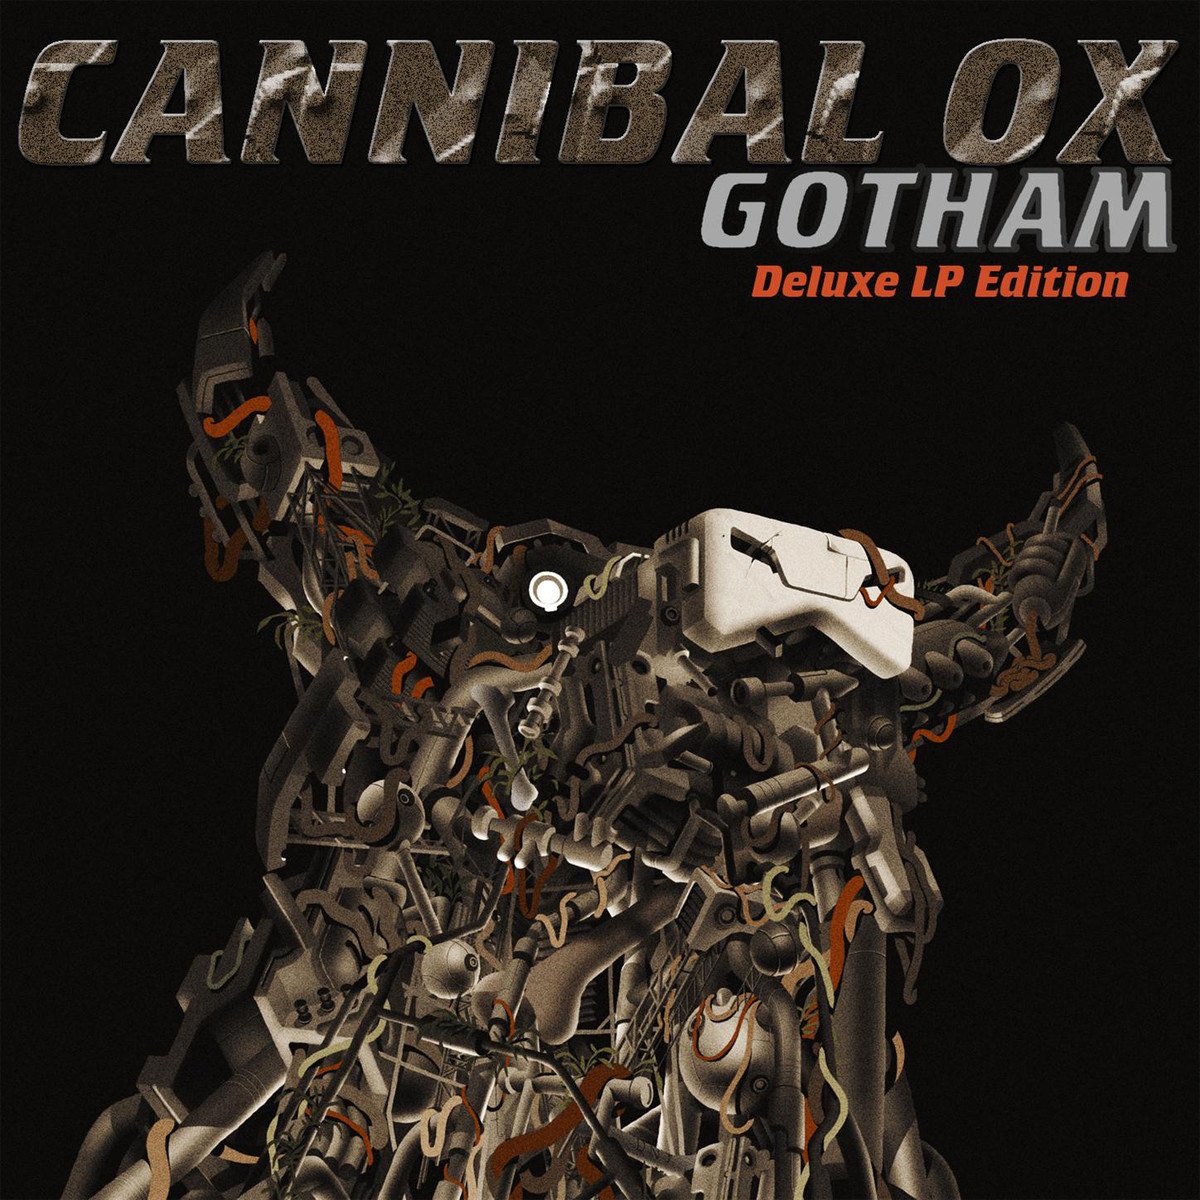 Gotham (Ox City)